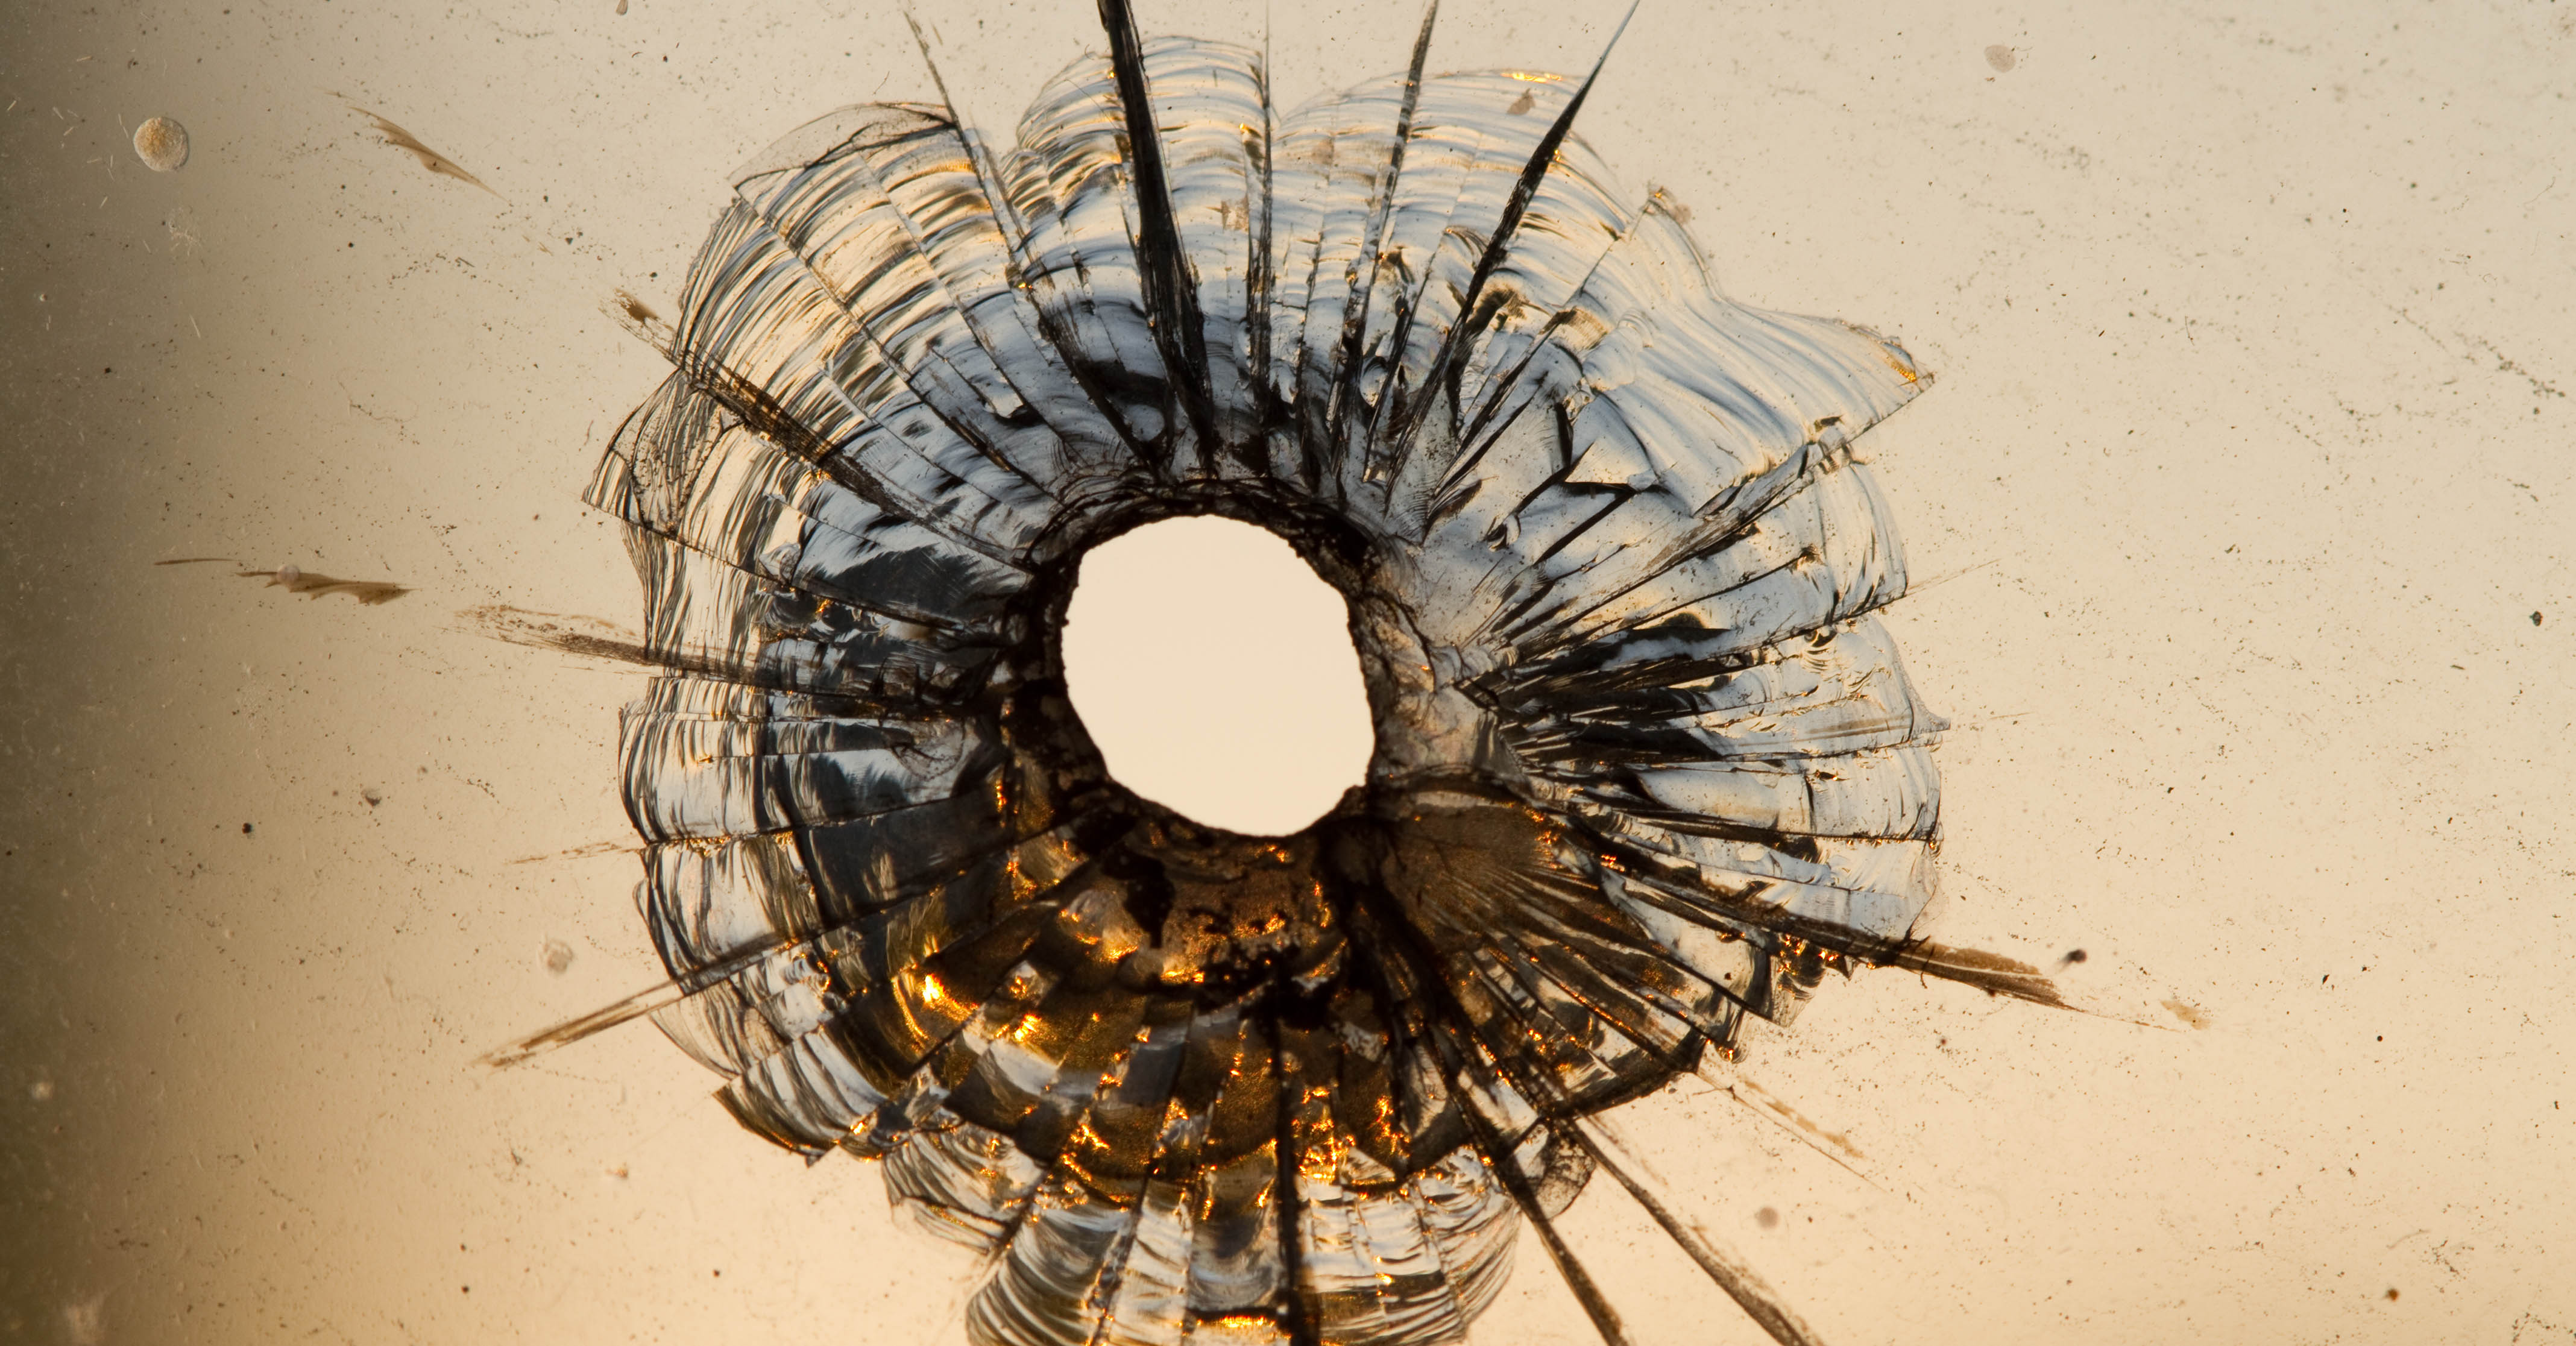 A bullet hole in a glass window.